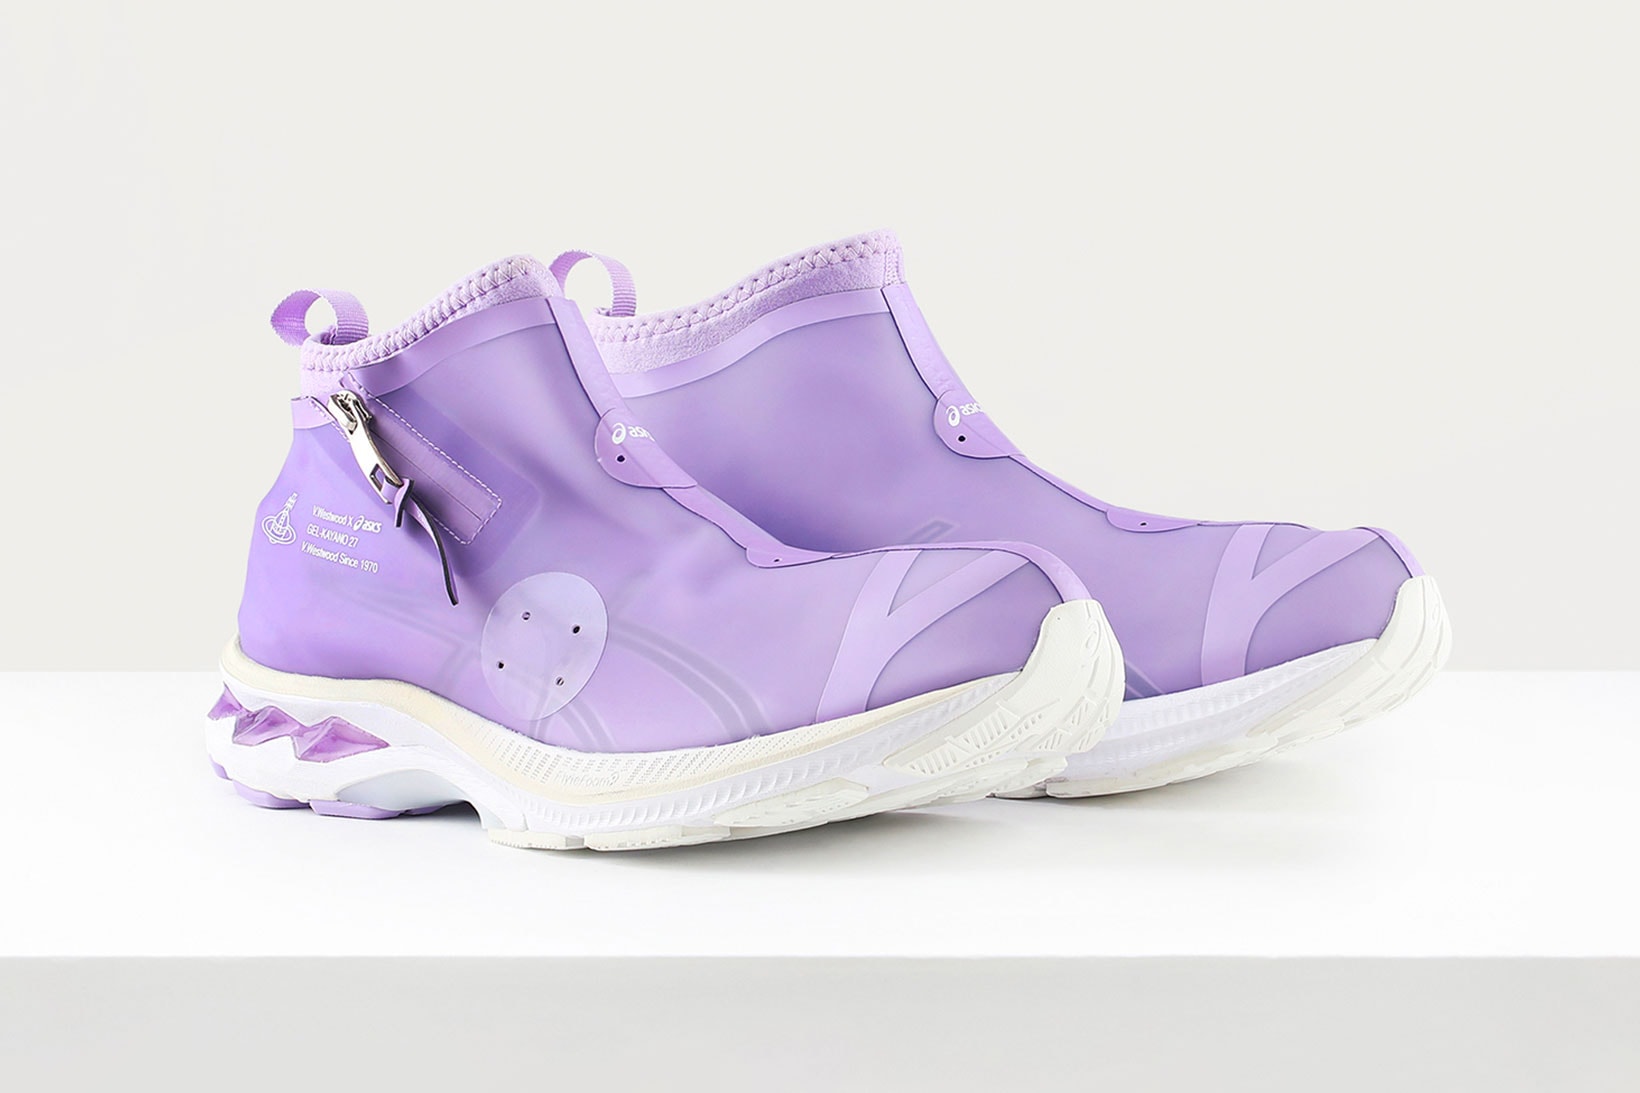 vivienne westwood asics gel kayano 27 ltx sneakers collaboration lilac purple side details